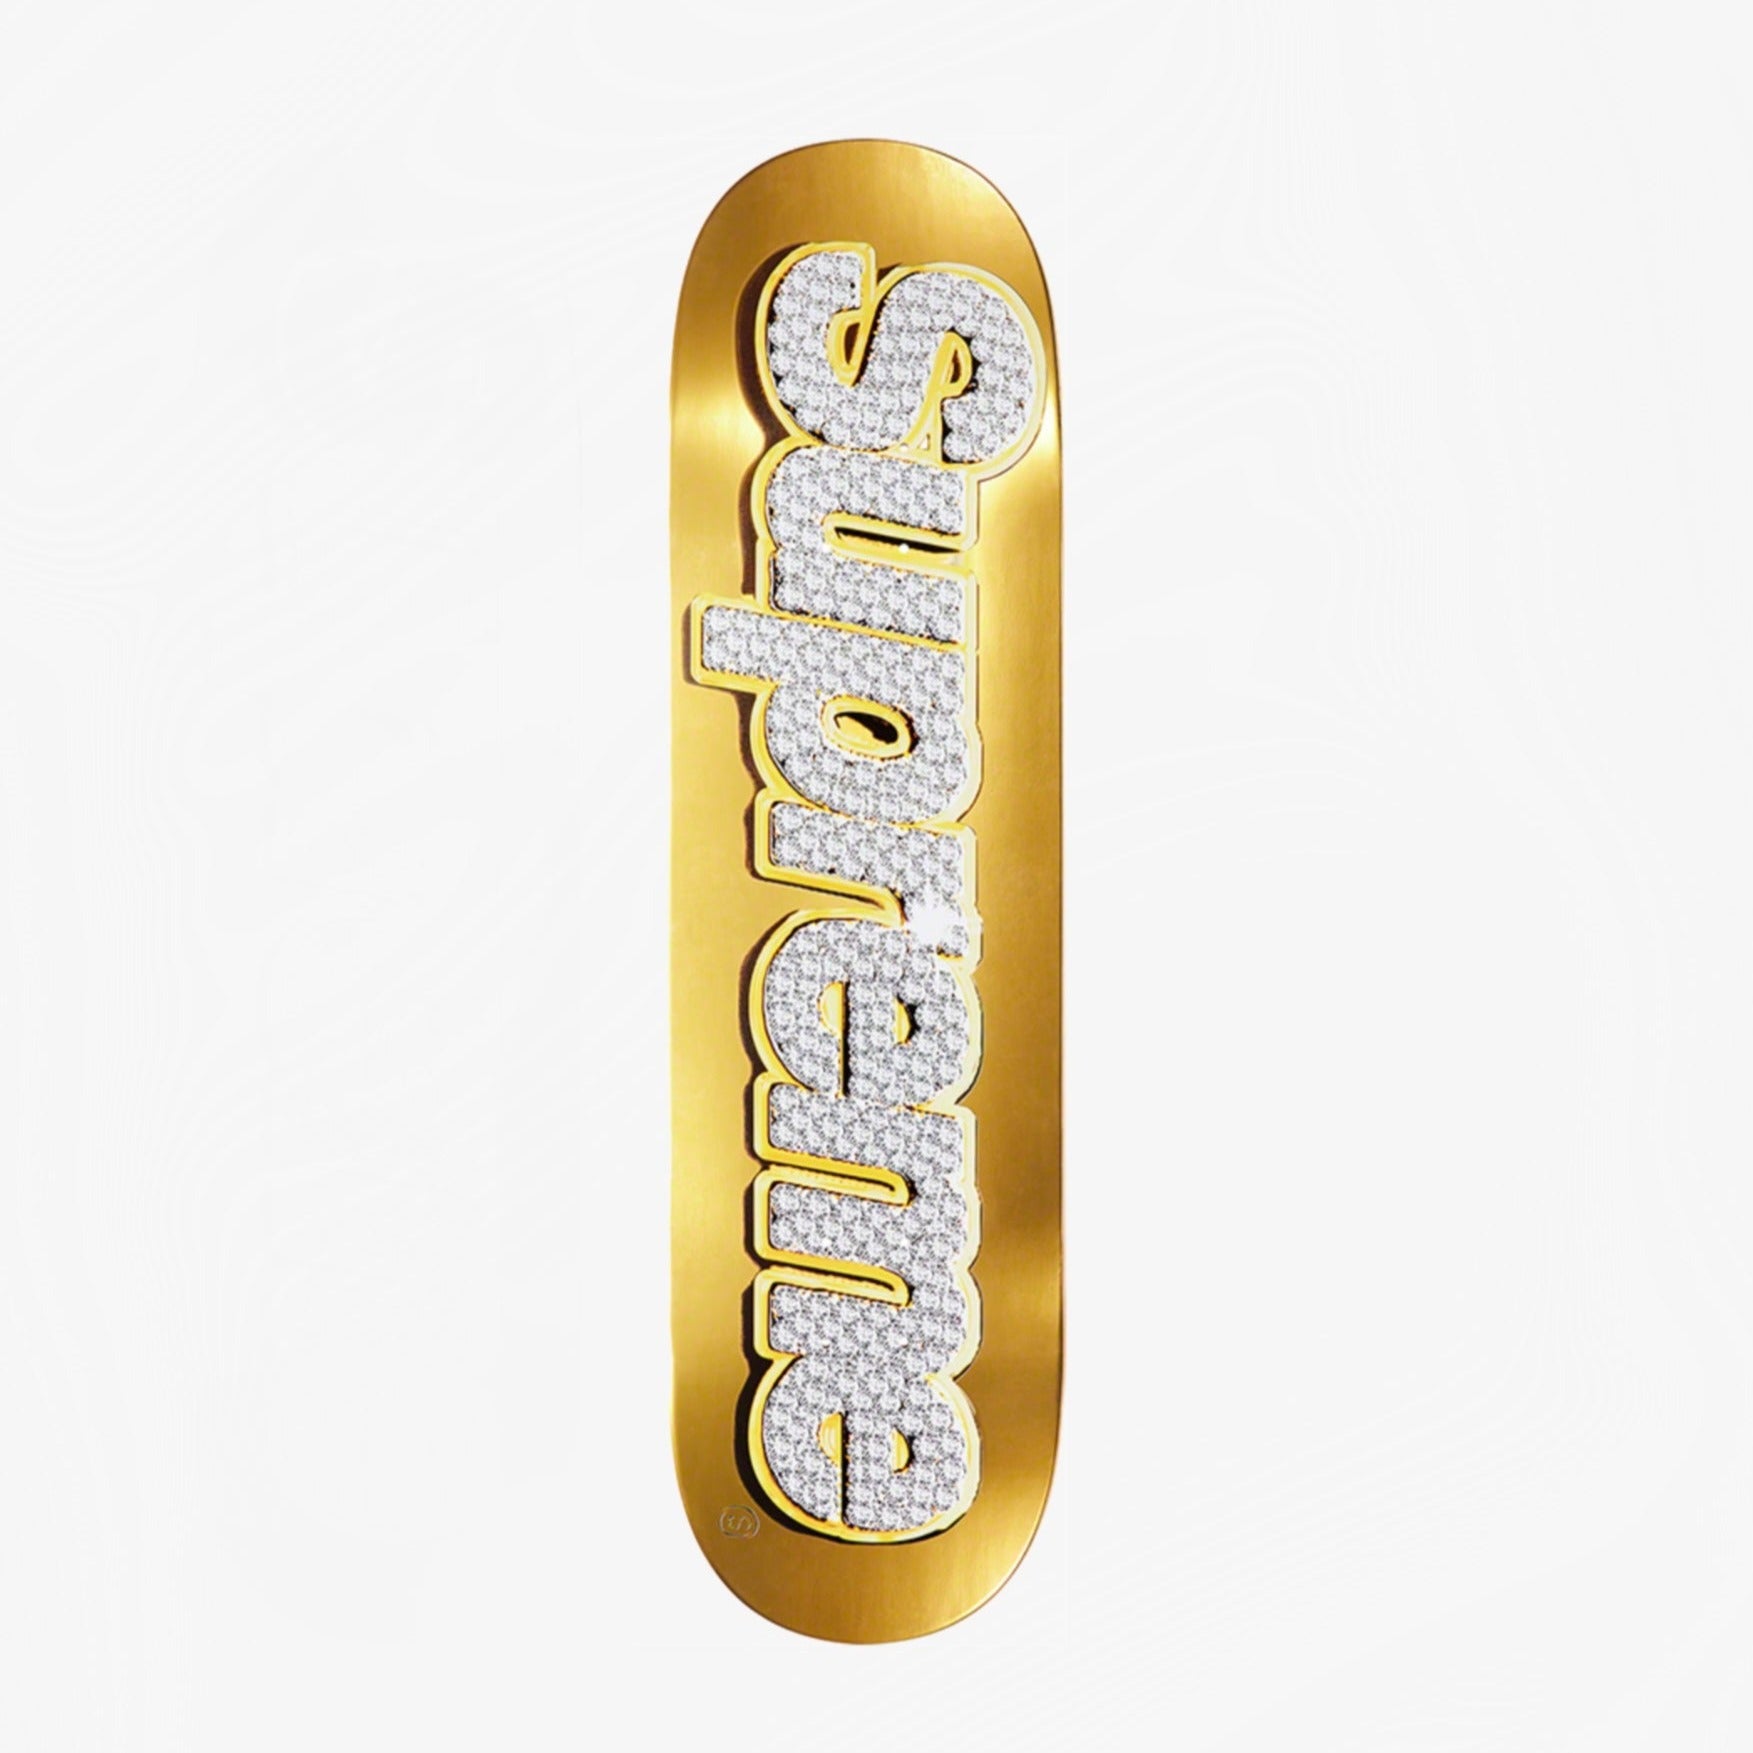 Supreme Bling Box Logo Skateboard Gold 【2021新春福袋】 - 小物